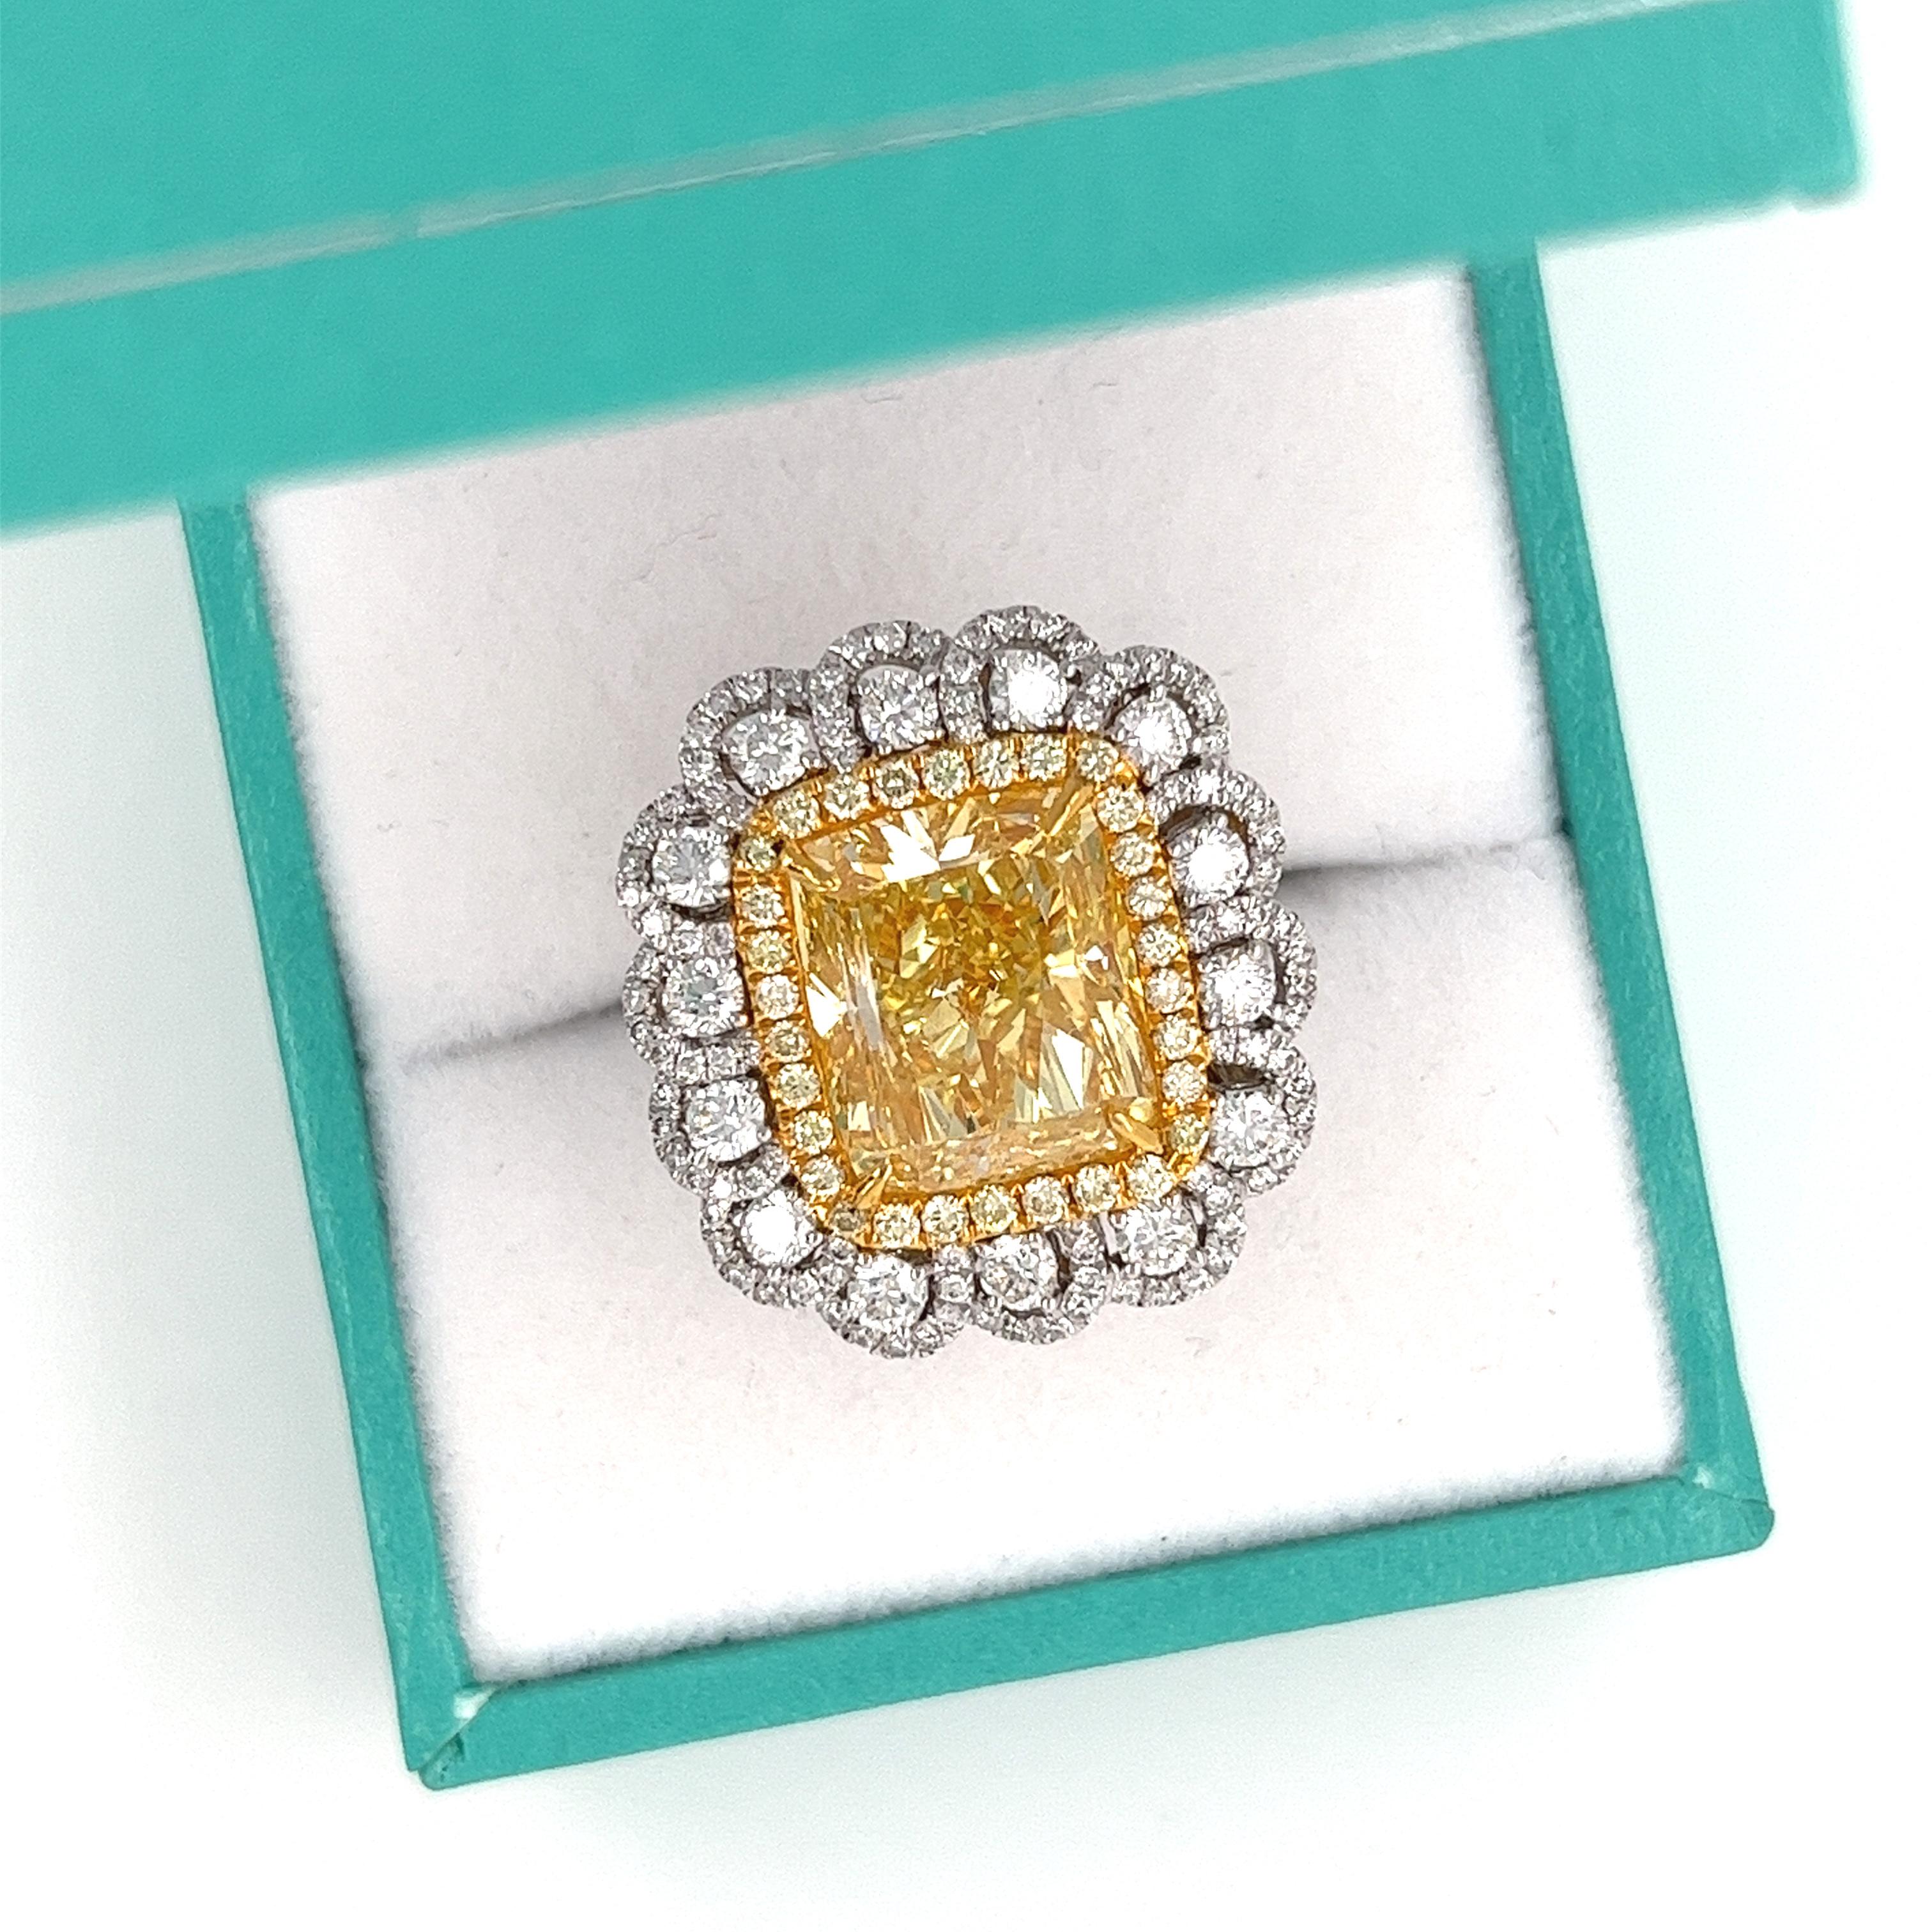 Art Nouveau GIA Certified Fancy Intense Yellow 7 Carat Radiant Cut Diamond Ring in 18k Gold For Sale